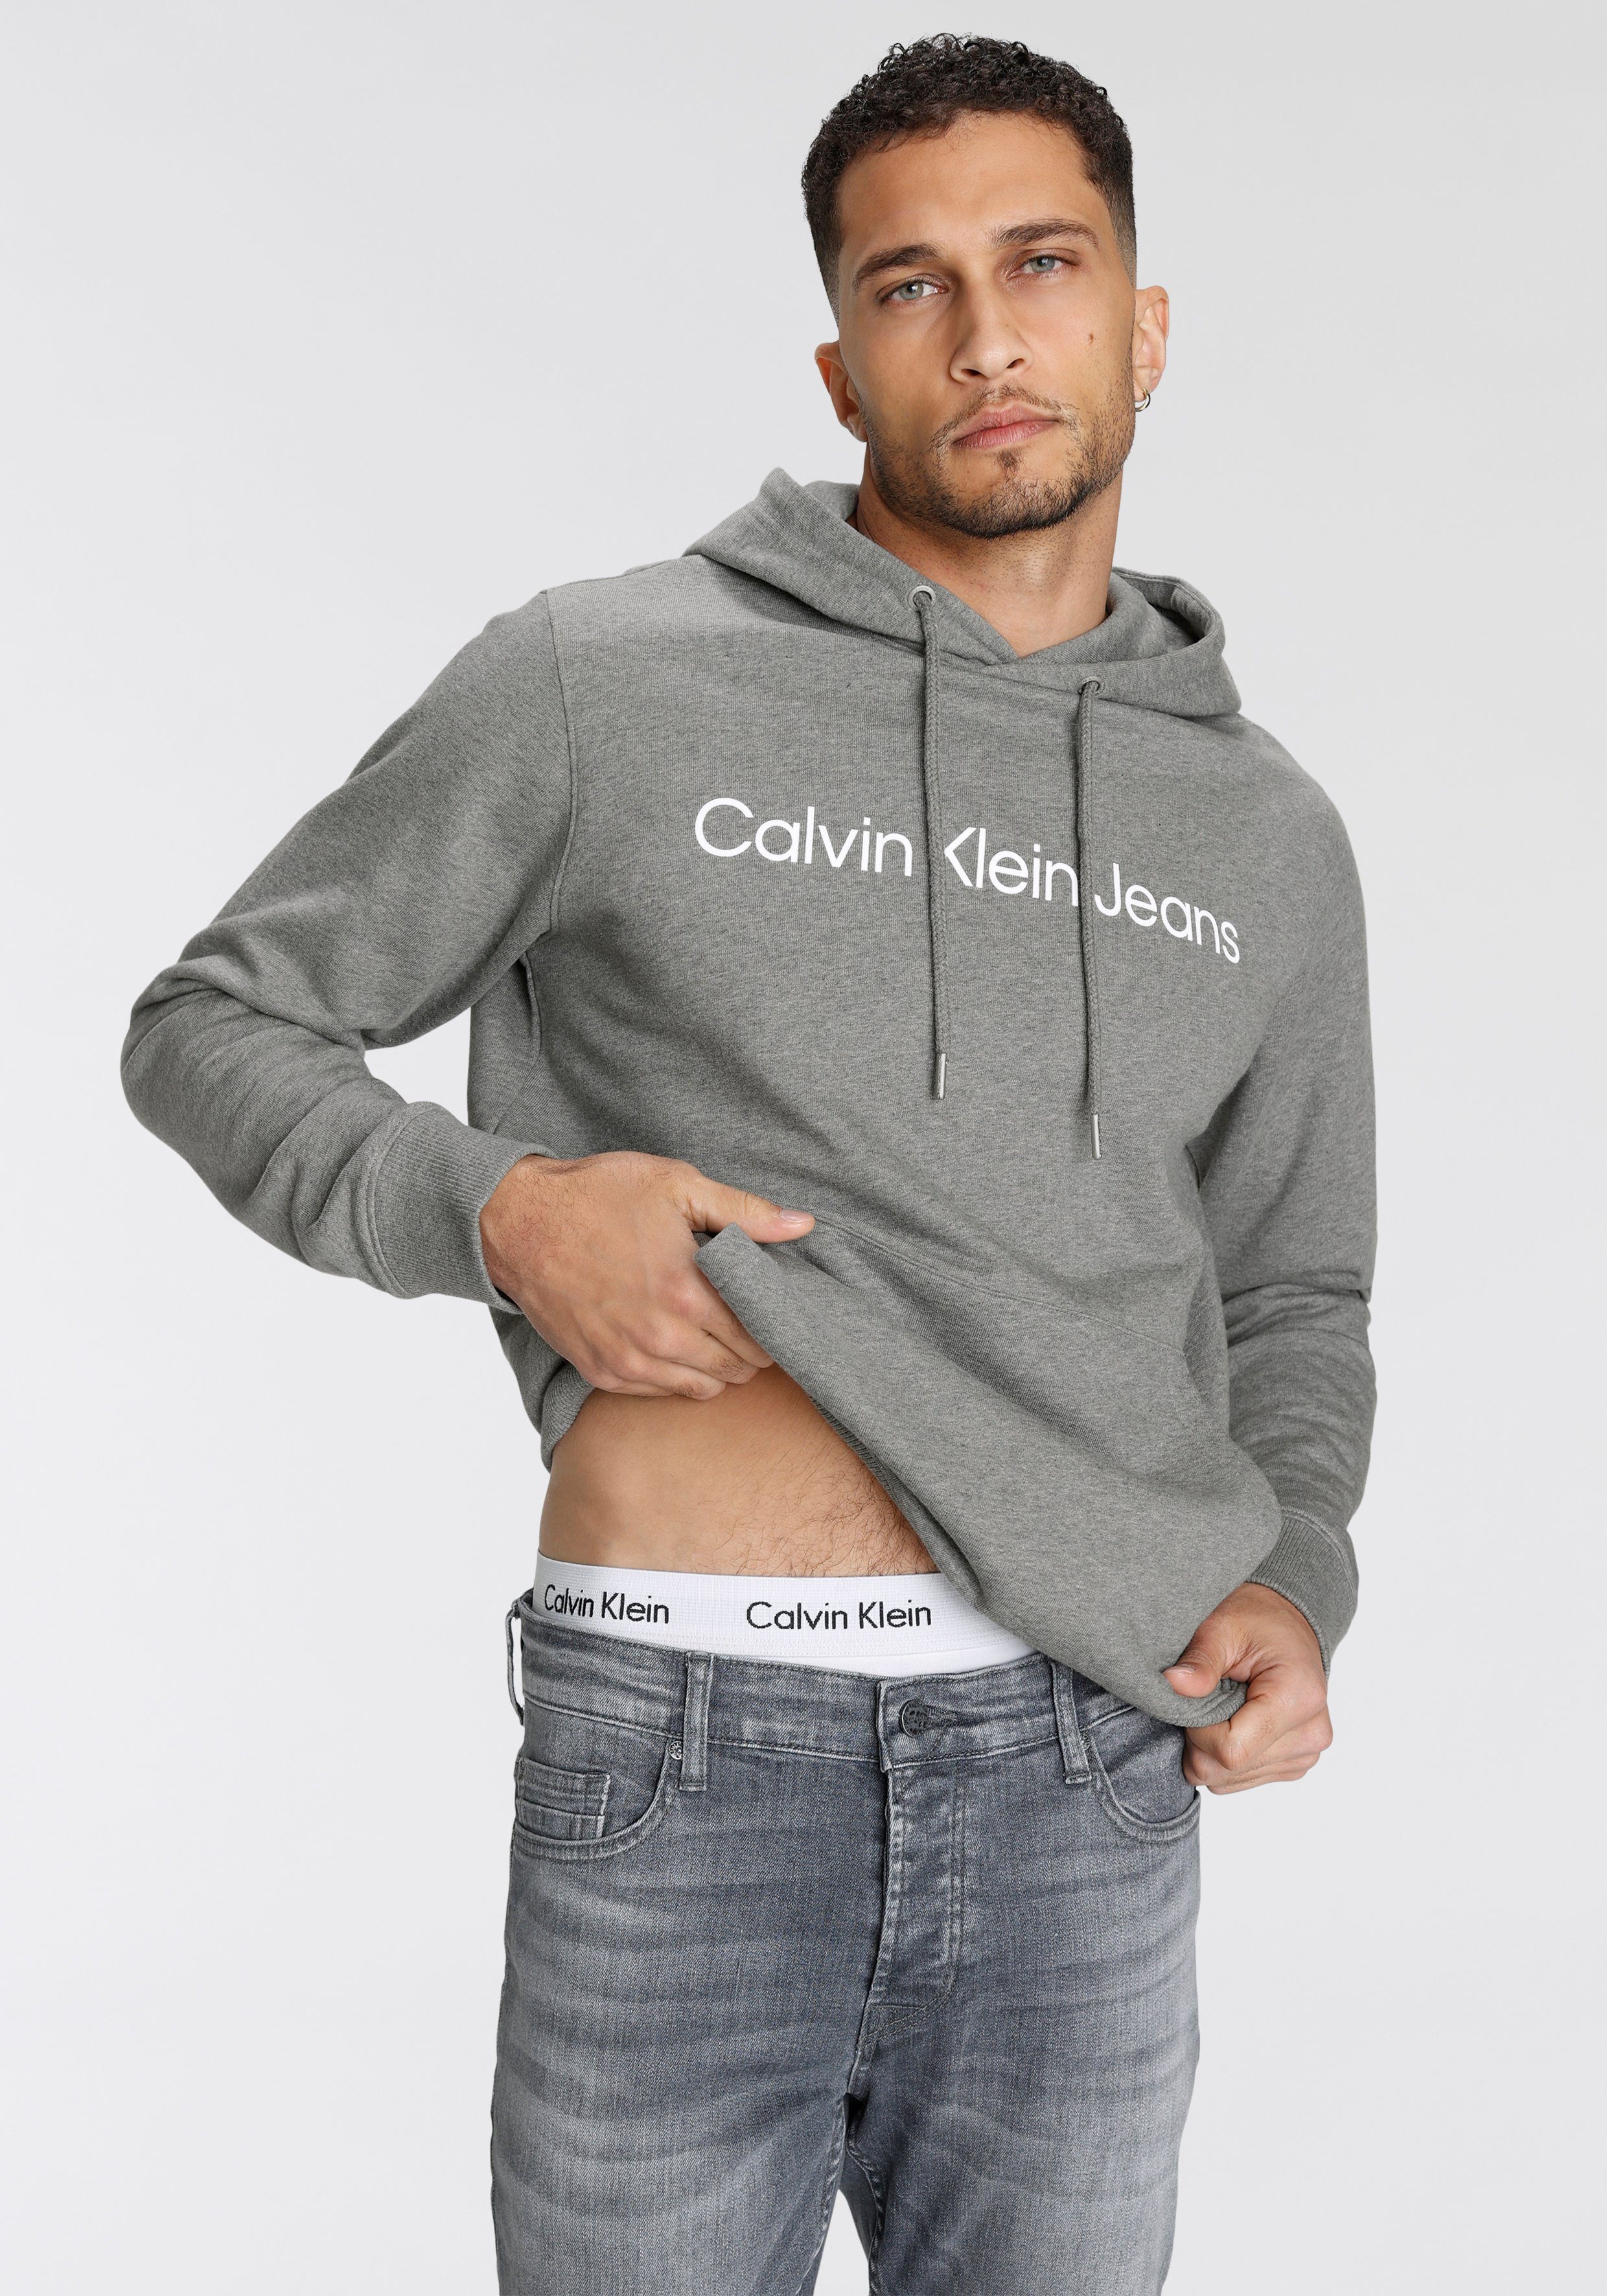 Jeans Heather Calvin Klein CORE Grey HOODIE Kapuzensweatshirt INSTITUTIONAL LOGO Mid